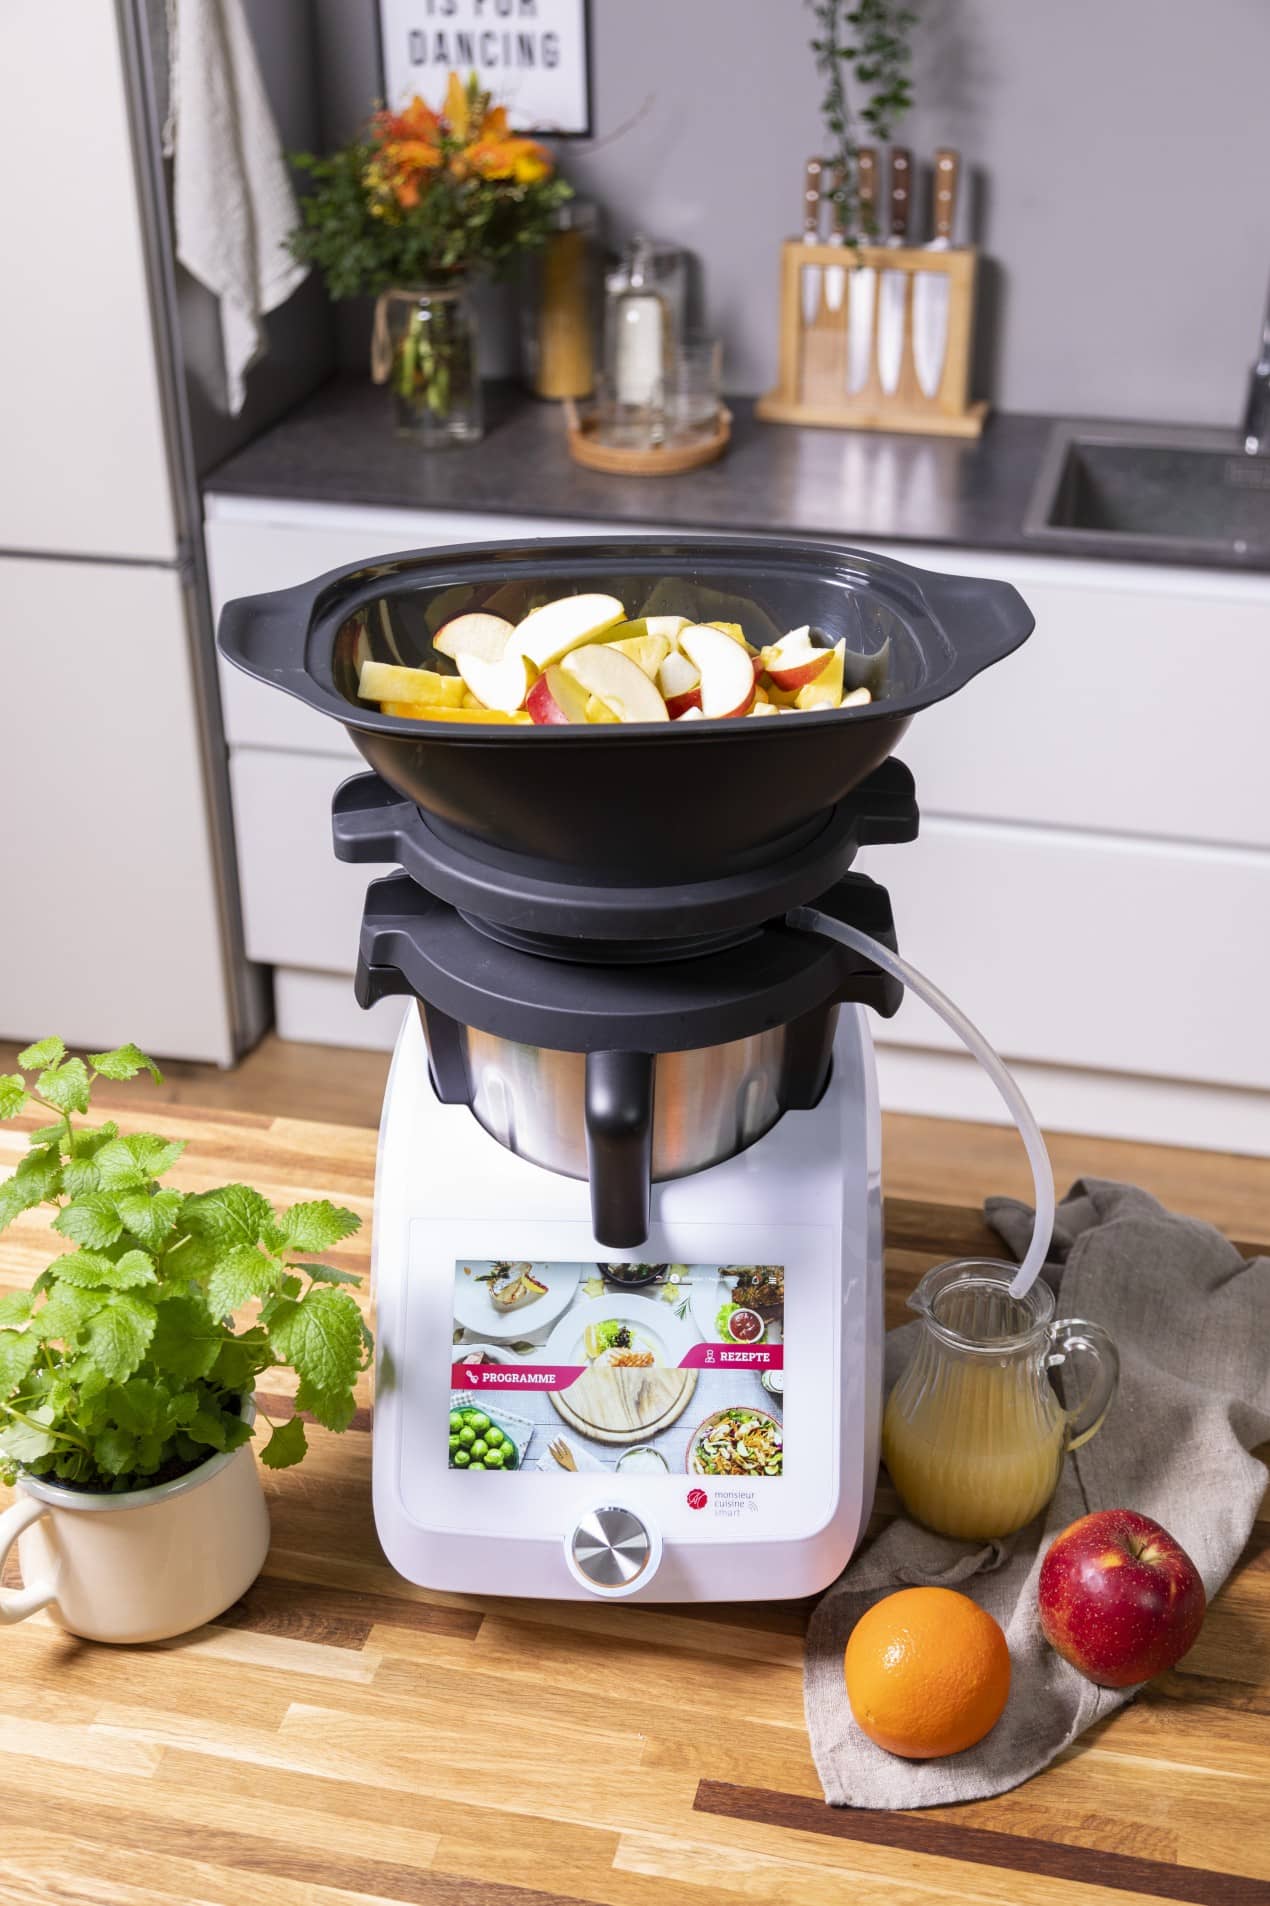 MixFino® centrifugadora lechuga para Monsieur Cuisine Smart